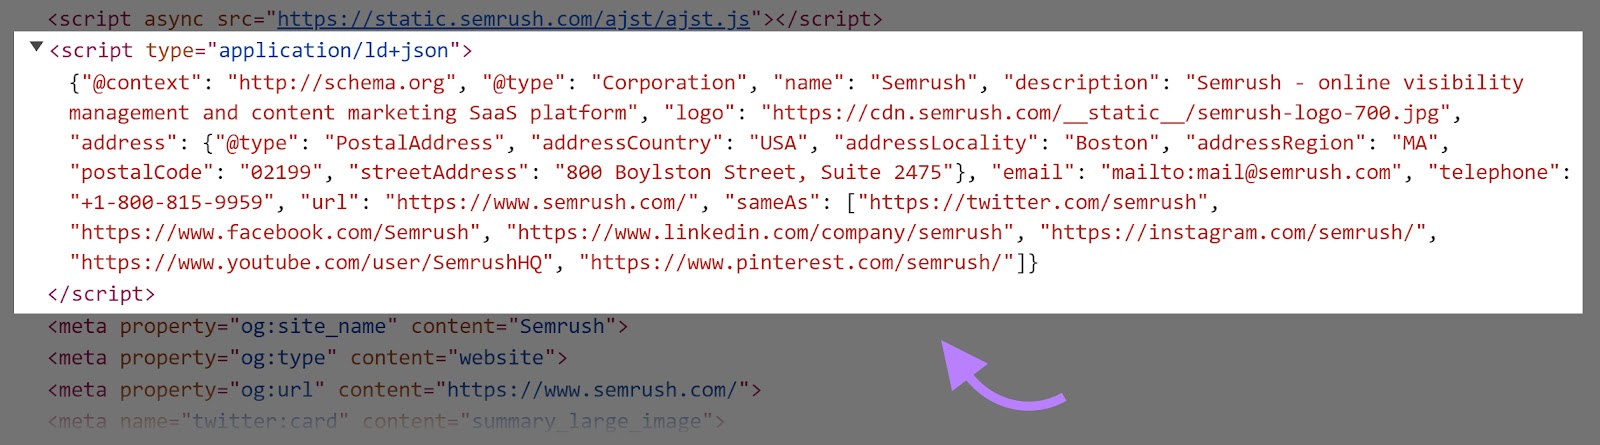 Schema markup HTML publication   codification  of the Semrush homepage.